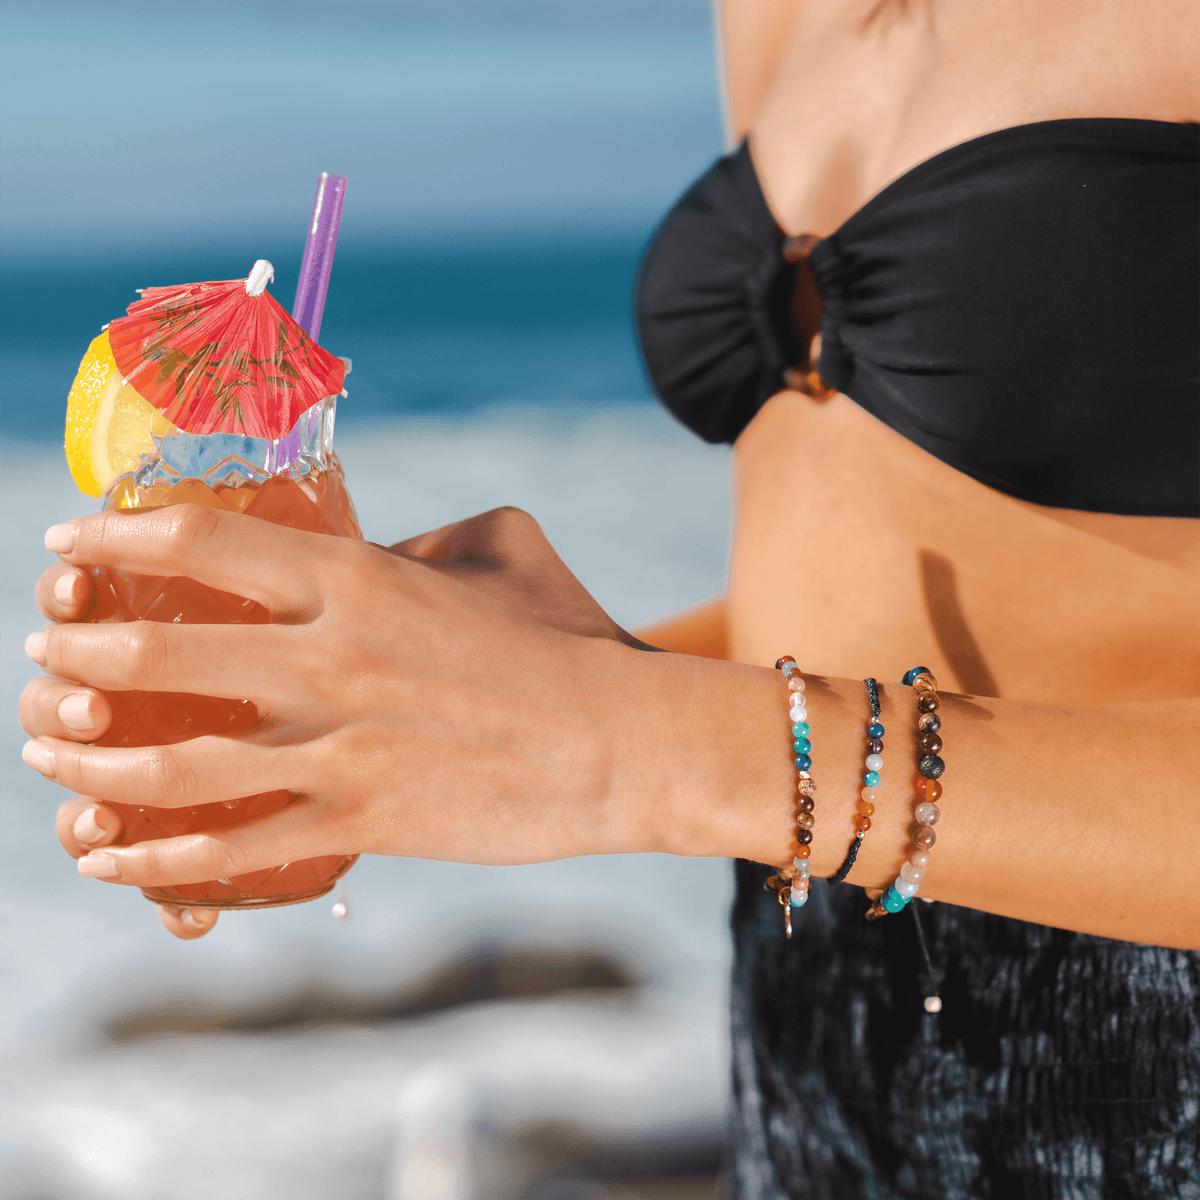 Woman at beach holding drink wearing 4mm Bracelet made up of healing stones including Jade, Jasper, Amazonite, Quartz, Tiger&#39;s Eye, Garnet, and Unakite.